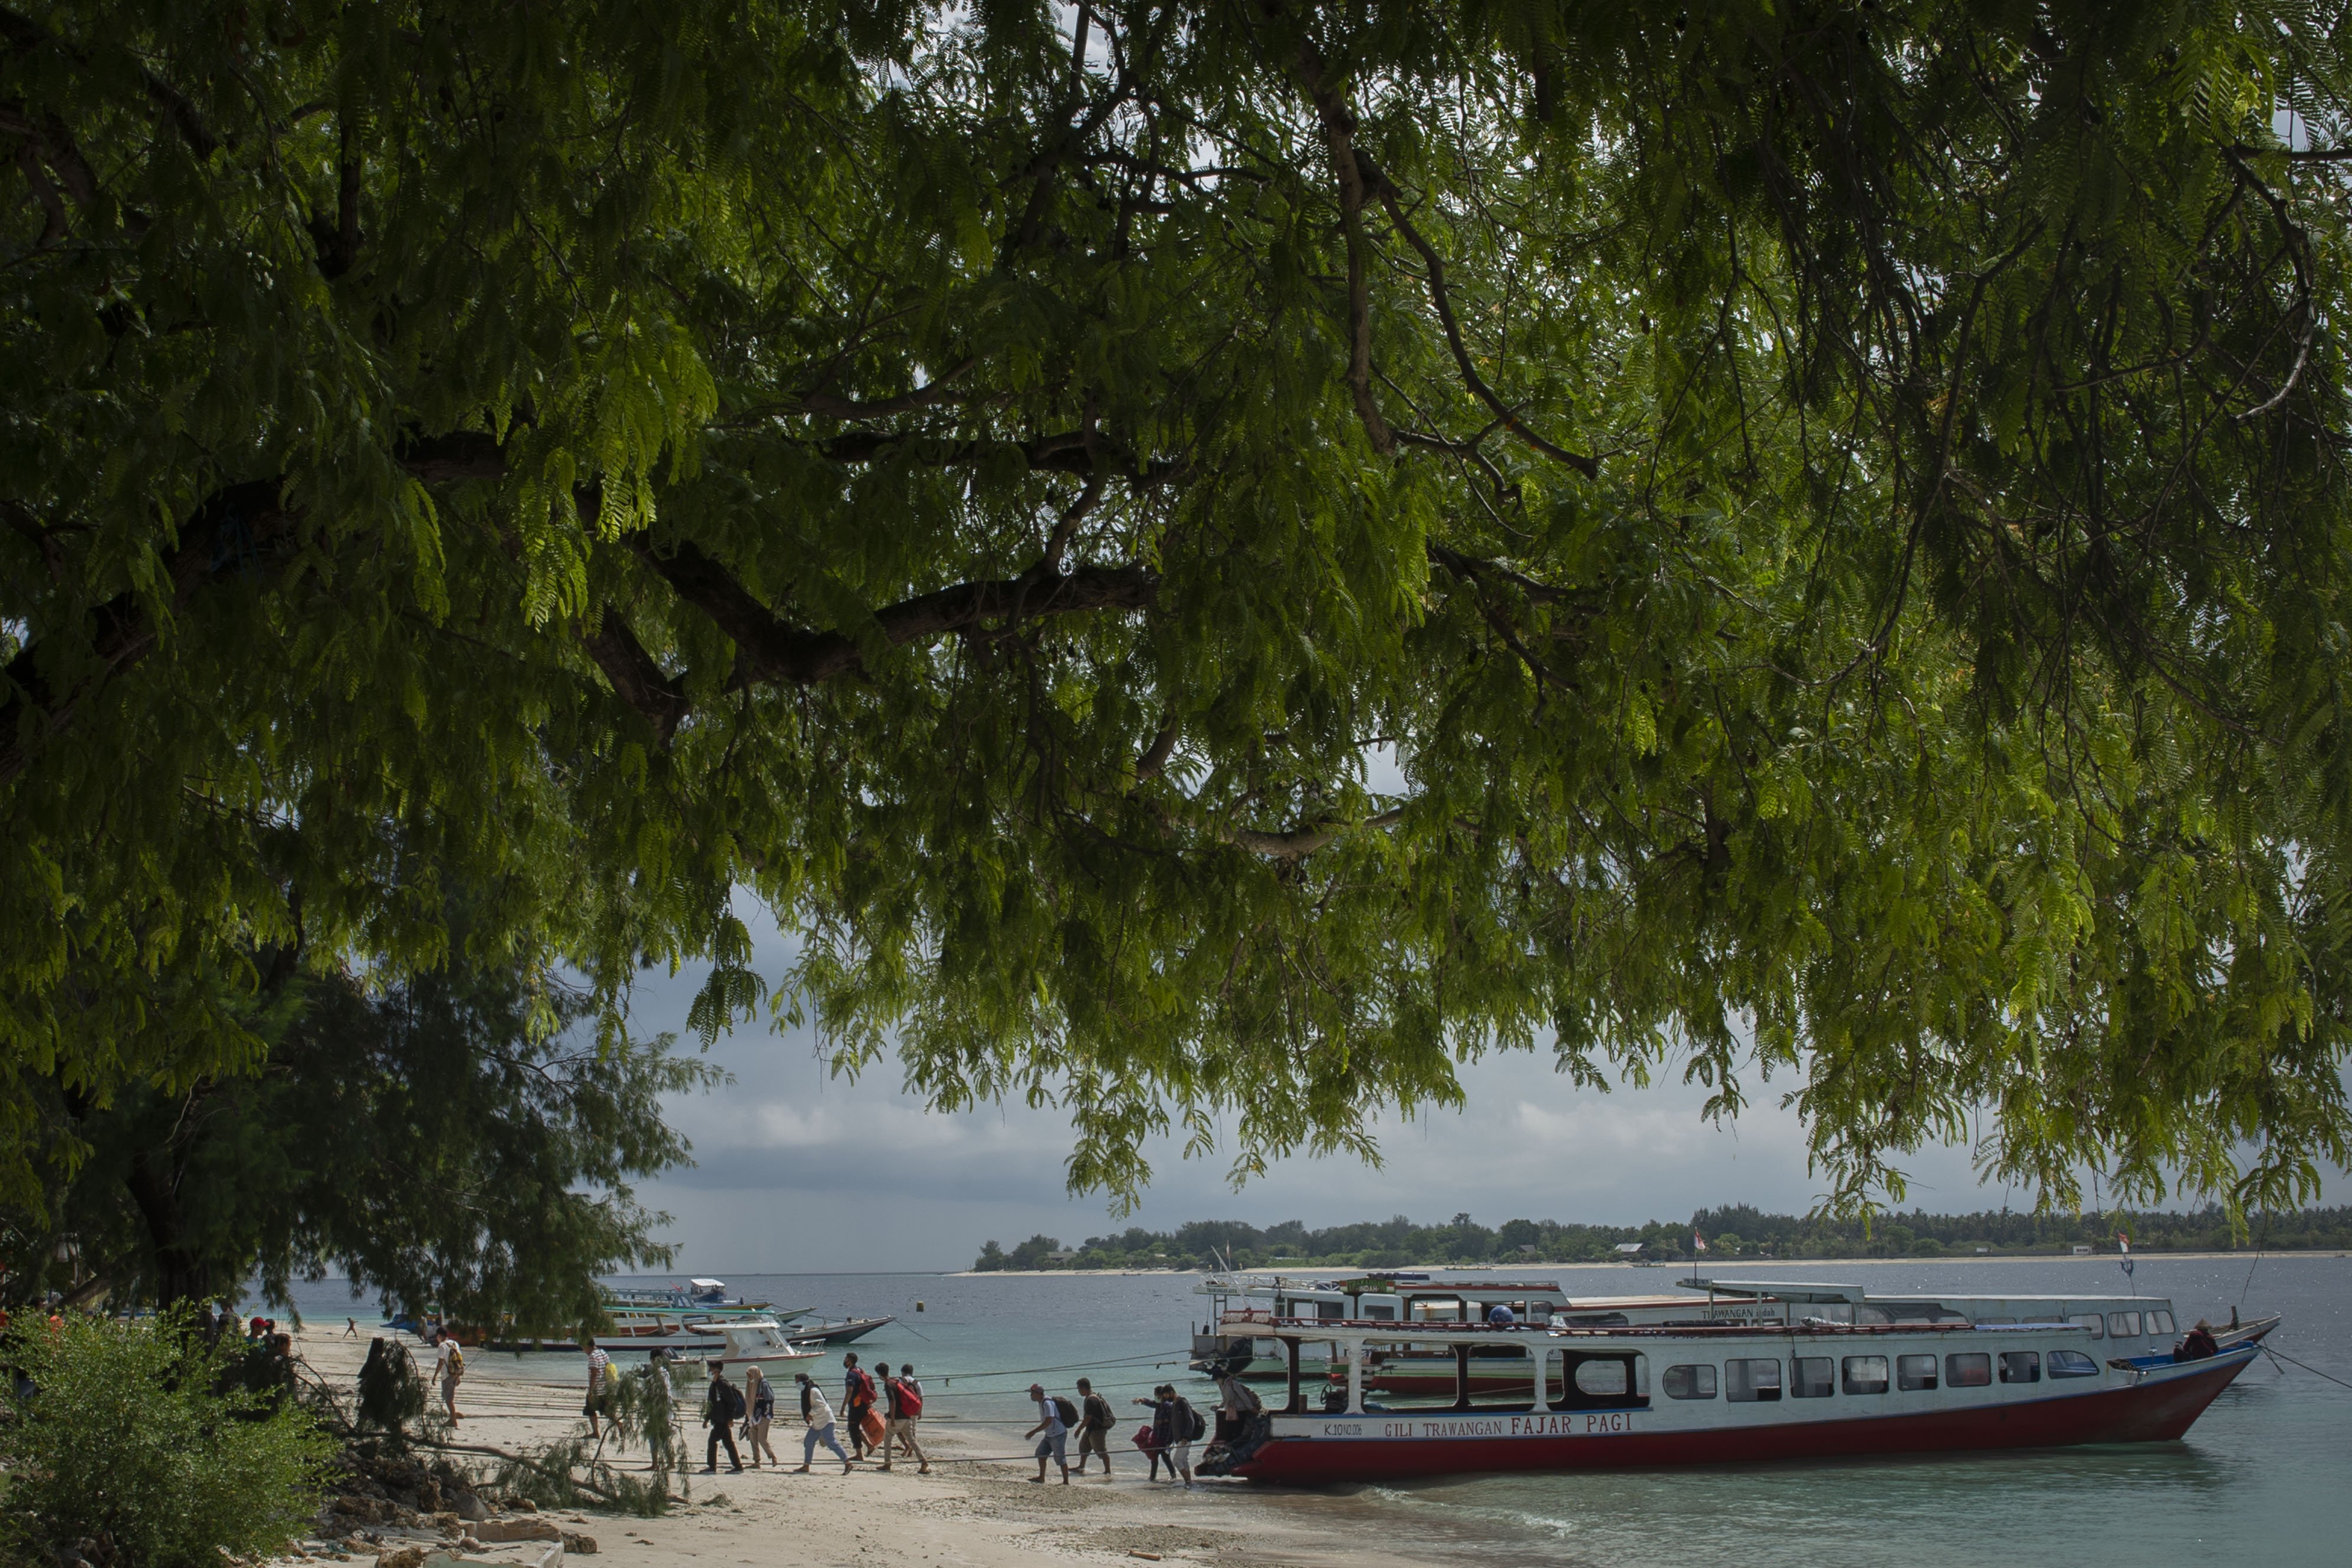 Warga setempat dan wisatawan turun dari kapal di Gili Trawangan, Kepulauan Gili, Lombok Utara, Nusa Tenggara Barat, Sabtu (6/3/2021). Kepulauan Gili merupakan salah satu destinasi wisata keunggulan Lombok yang terdiri dari tiga pulau, yaitu Gili Trawangan, Meno, dan Air. 